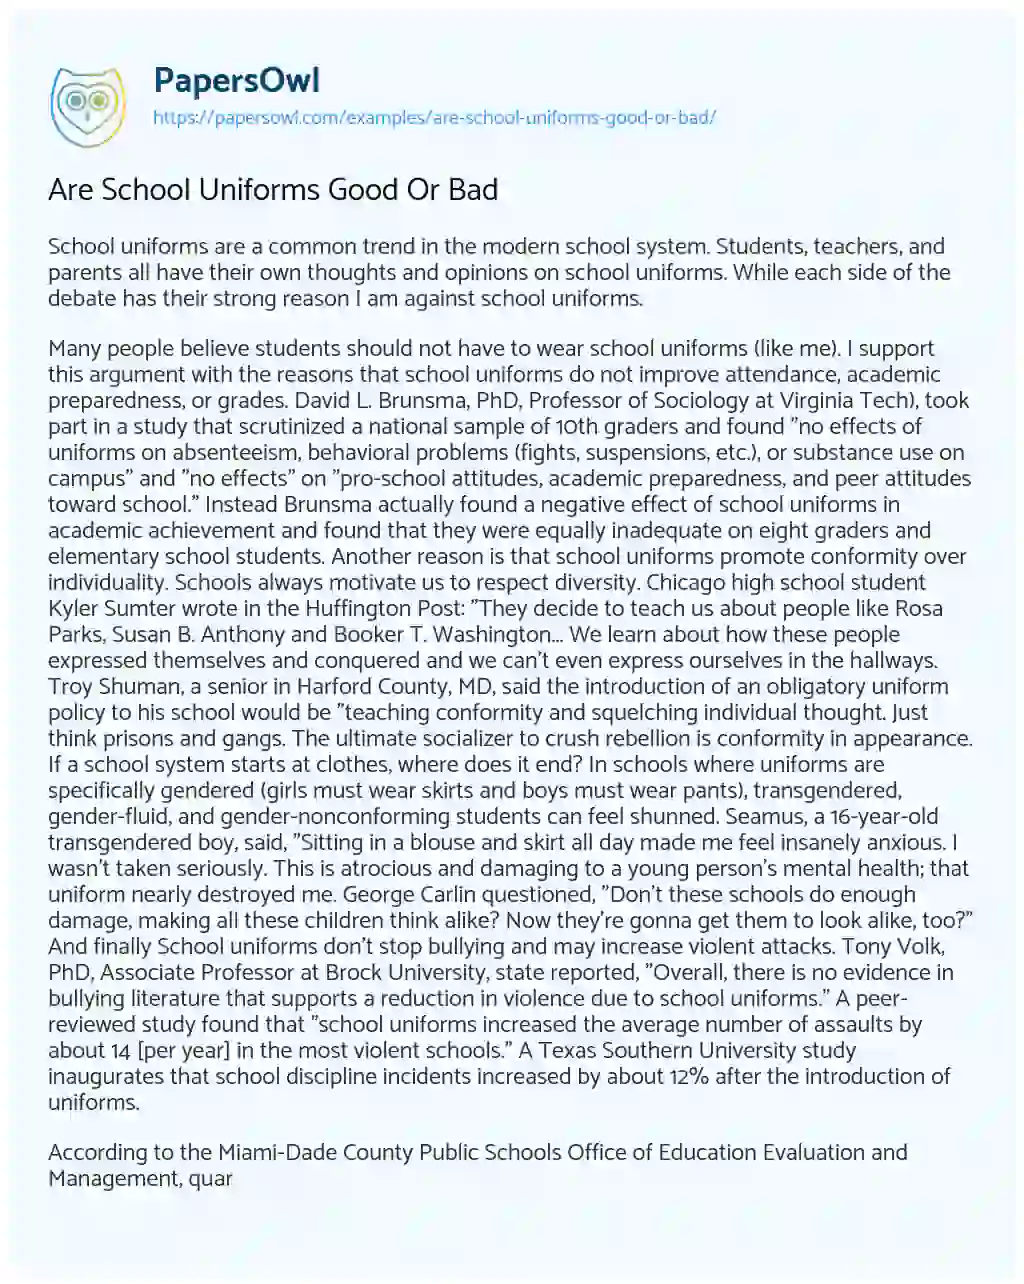 Essay on Are School Uniforms Good or Bad